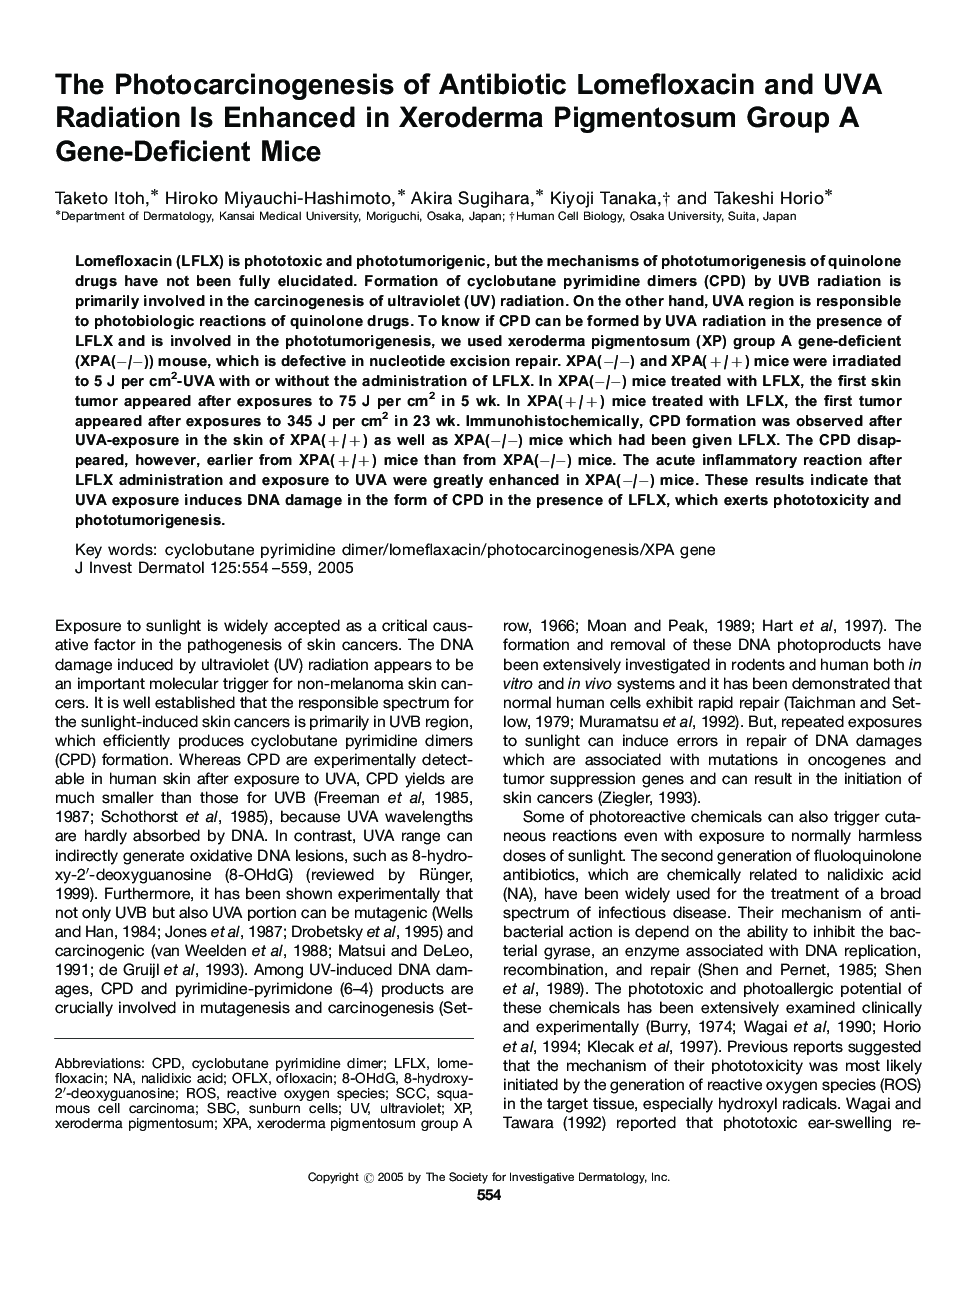 The Photocarcinogenesis of Antibiotic Lomefloxacin and UVA Radiation Is Enhanced in Xeroderma Pigmentosum Group A Gene-Deficient Mice